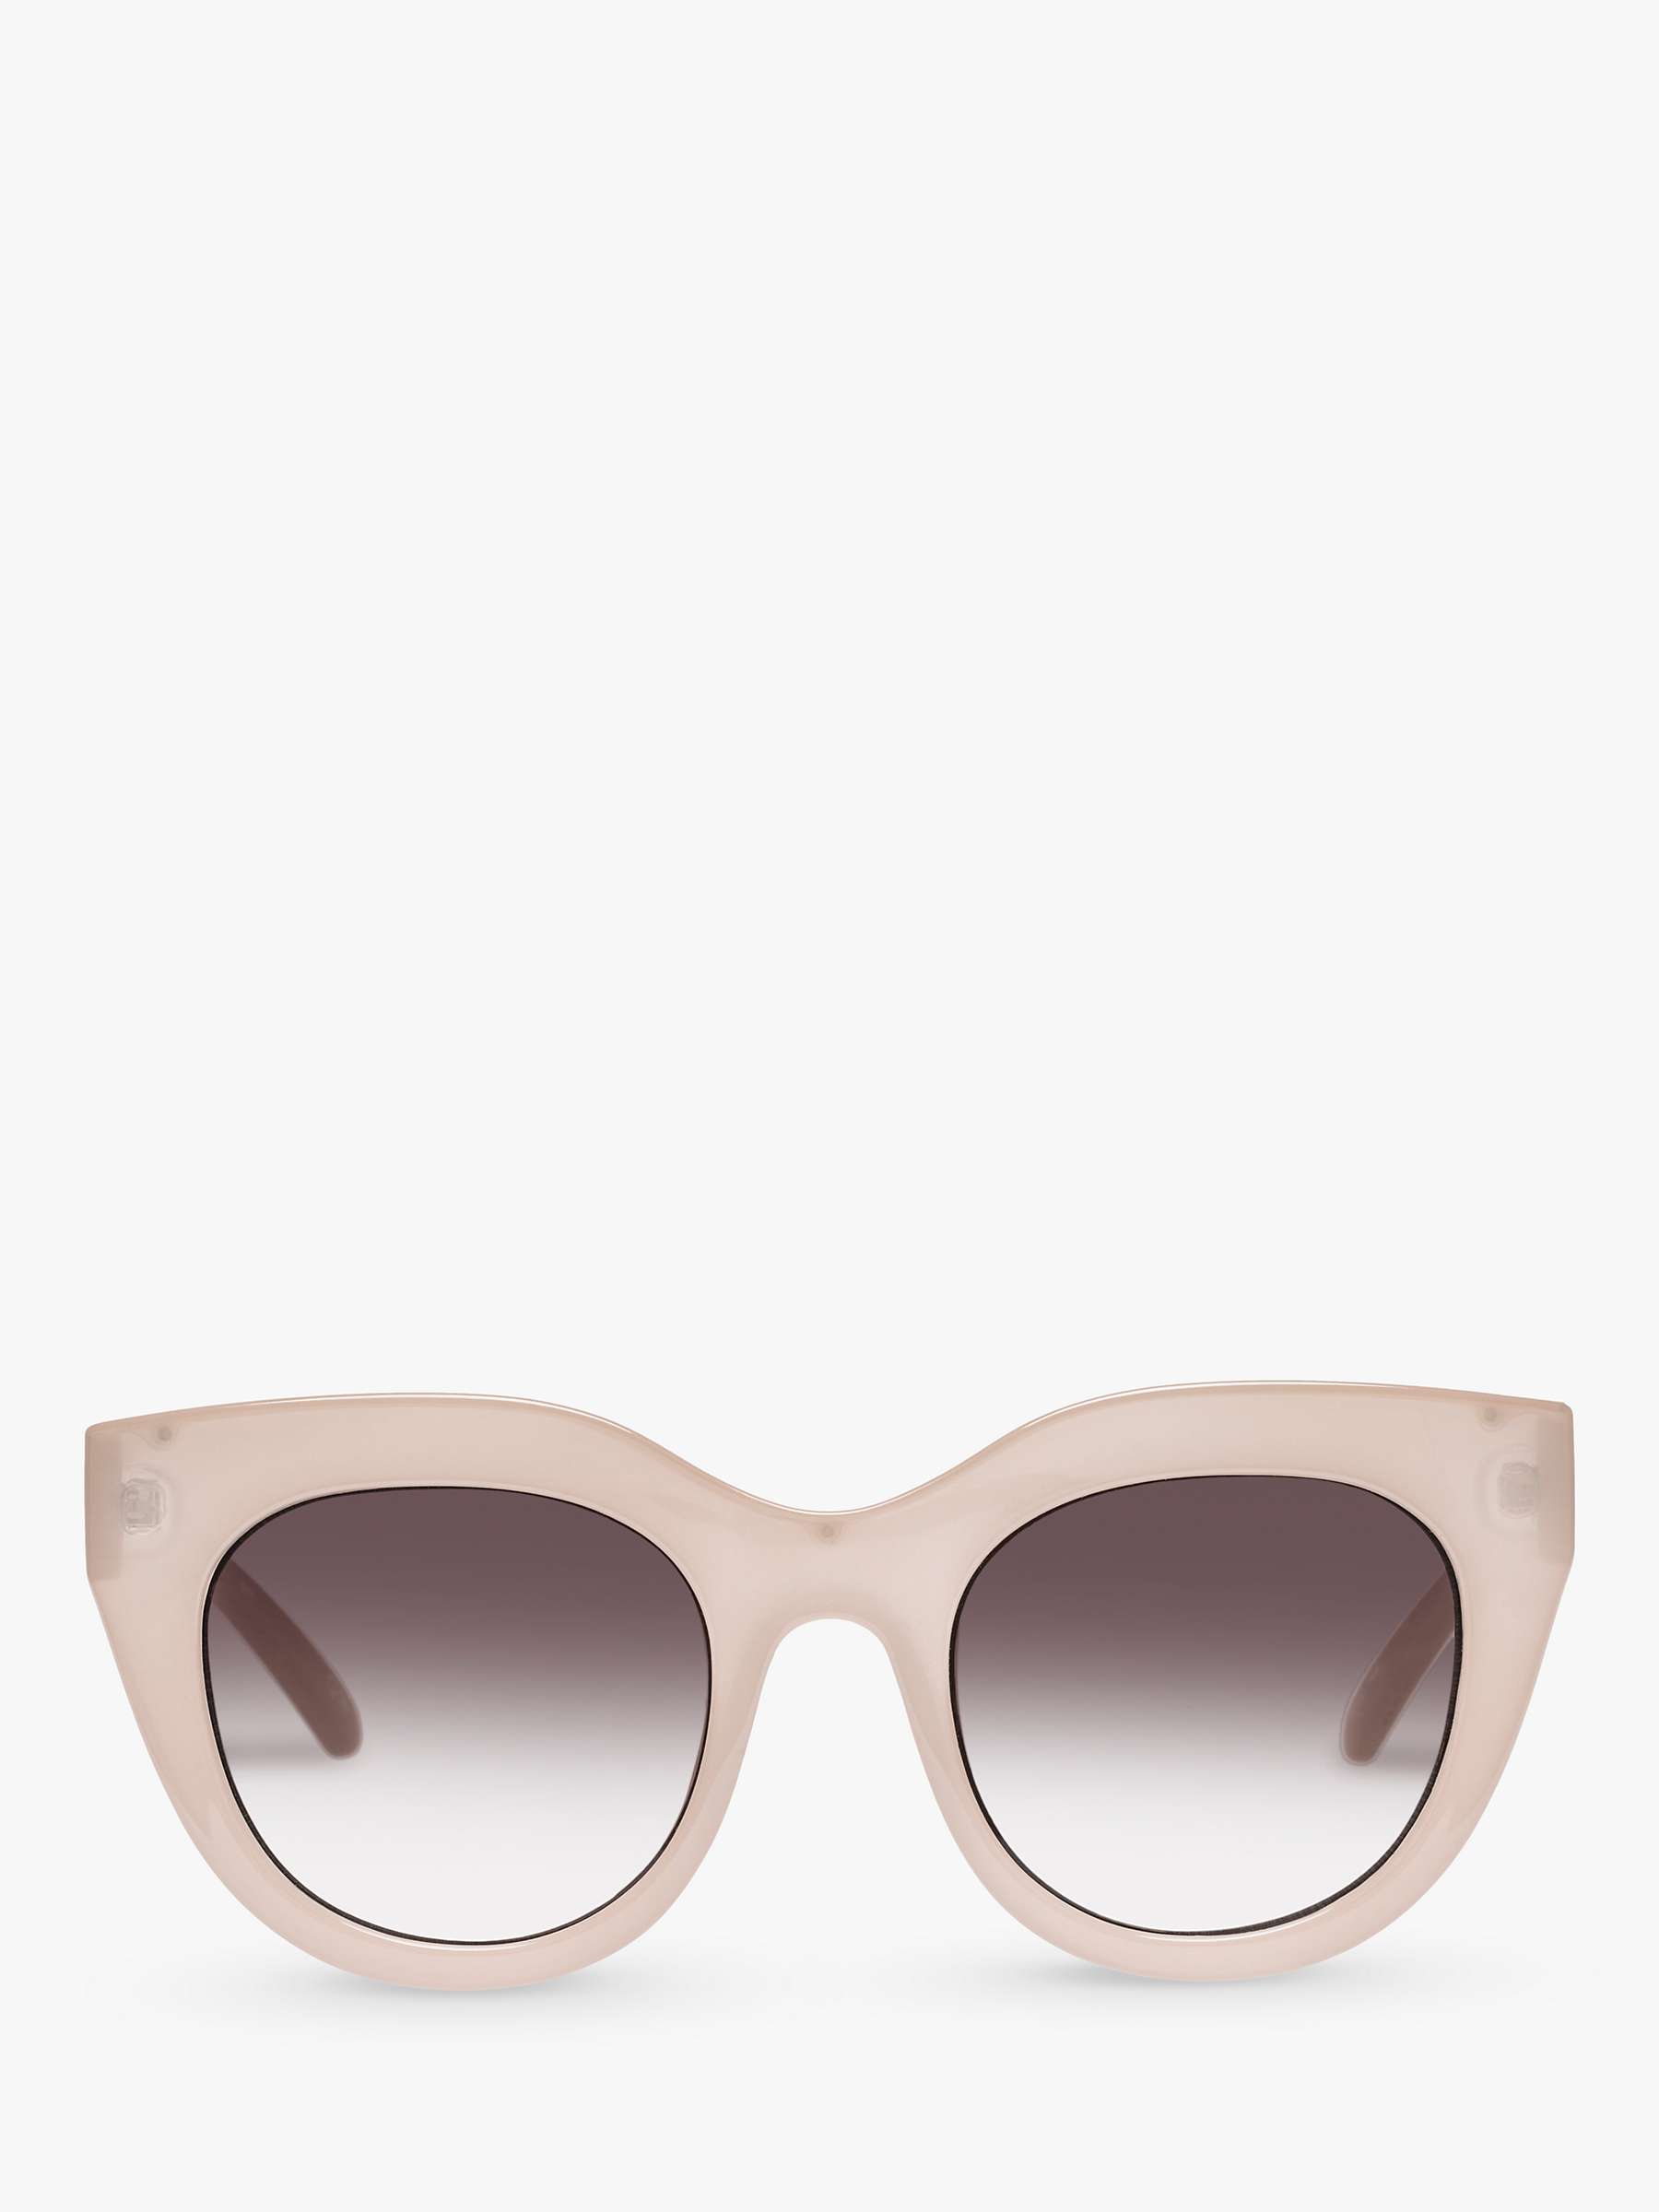 Buy Le Specs L5000158 Women's Airheart Cat's Eye Sunglasses, Beige/Grey Gradient Online at johnlewis.com